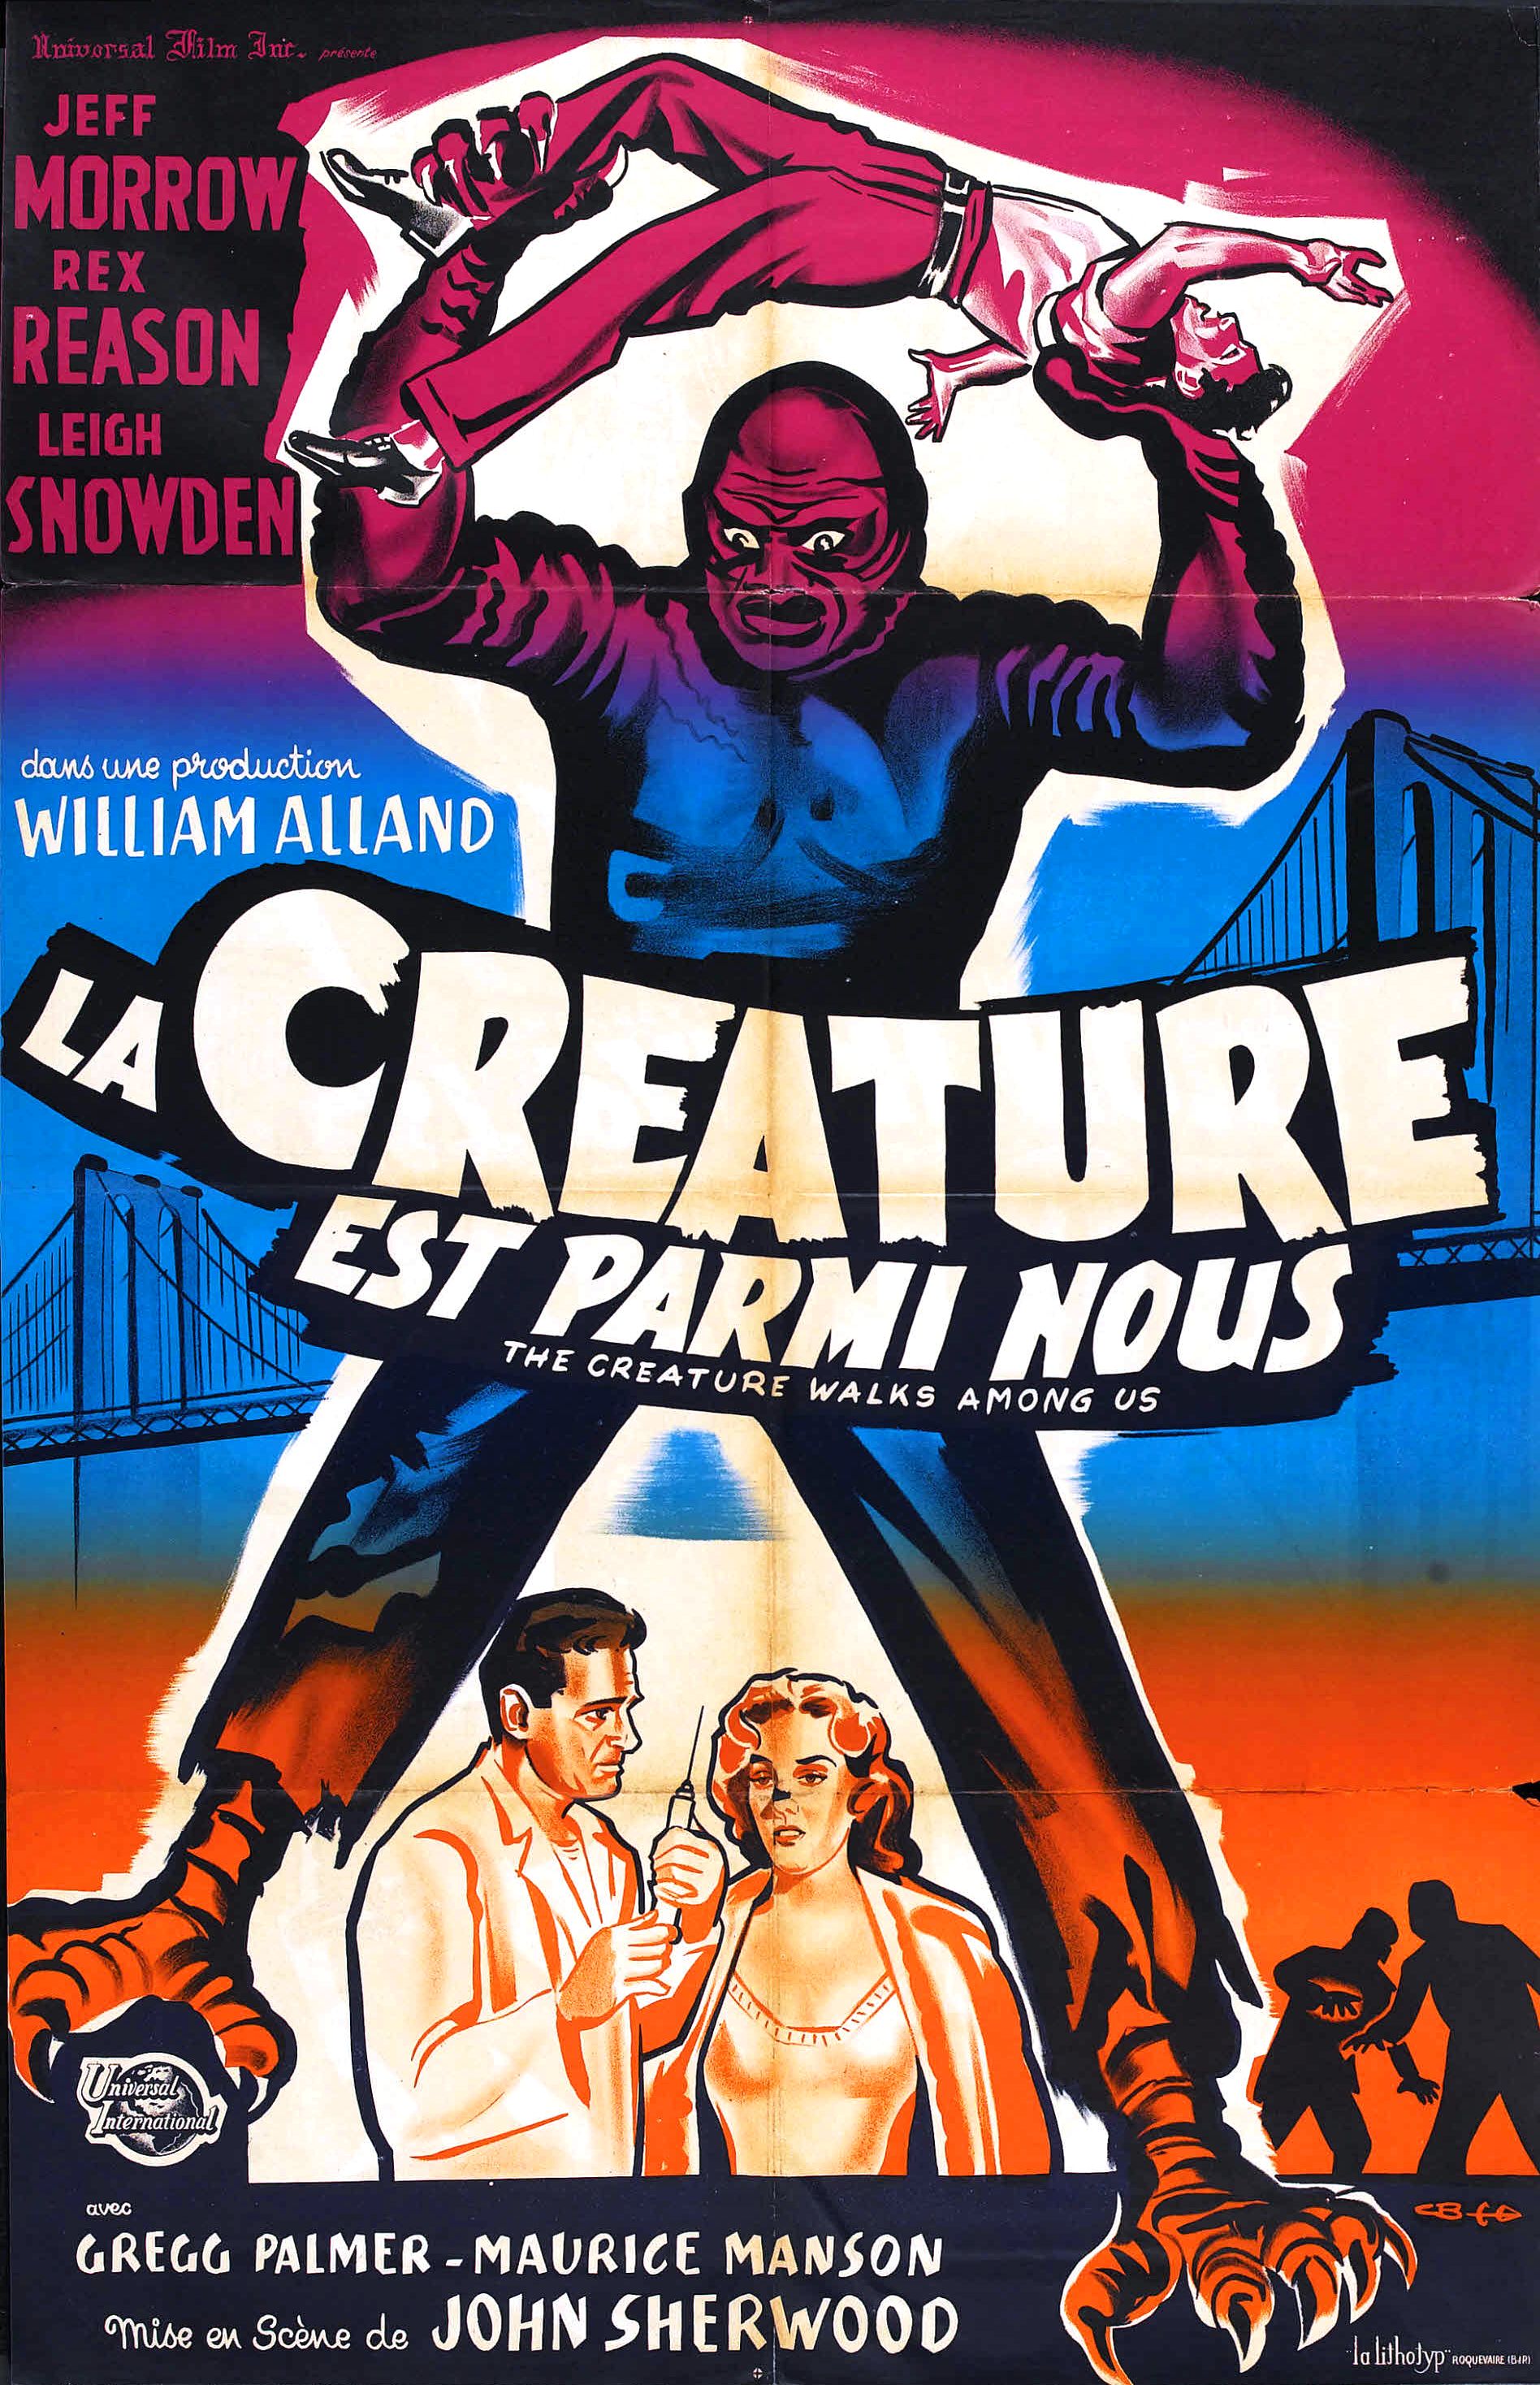 Sinema Sanattır: Muhteşem Afişlere Sahip 20 Film 6 – creature walks among us poster 06